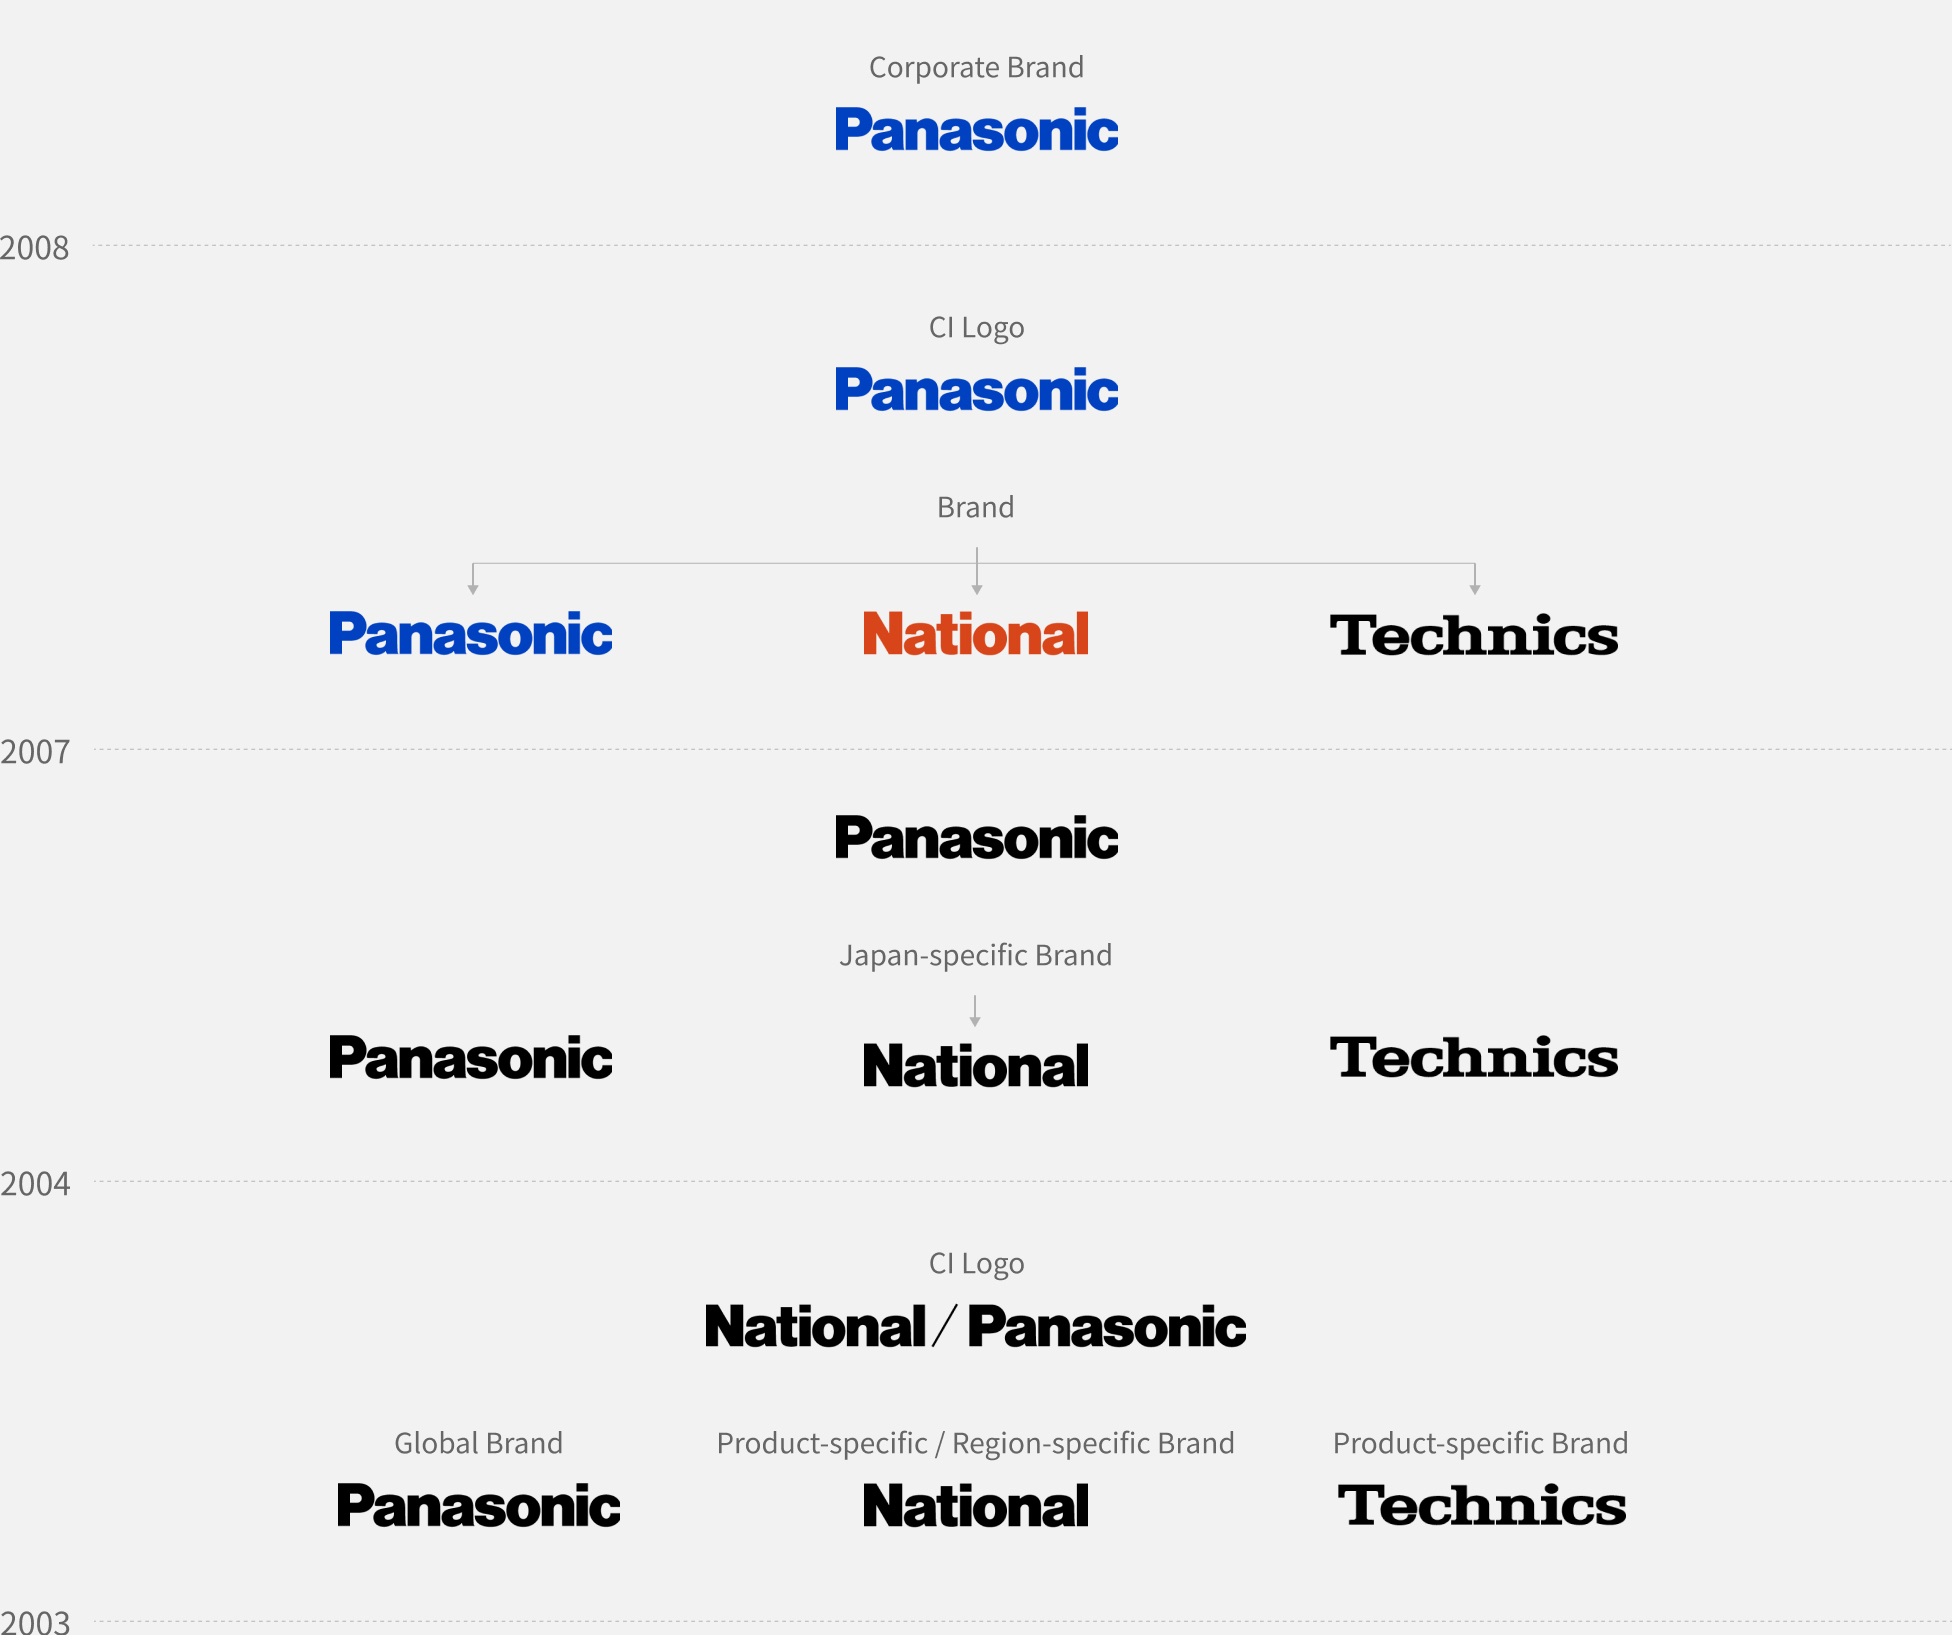 2008: "Panasonic" as our Corporate Brand. 2007: "Panasonic" as our CI logo. Our three brands "Panasonic," "National," and "Technics". 2004: "Panasonic." "Panasonic," "National" as the Japan-specific brand and "Technics." 2003: "National" and "Panasonic" as CI logo, "Panasonic" as our global brand, "National" as brands for supecific regions and products, and "Technics" as product-specific brand.